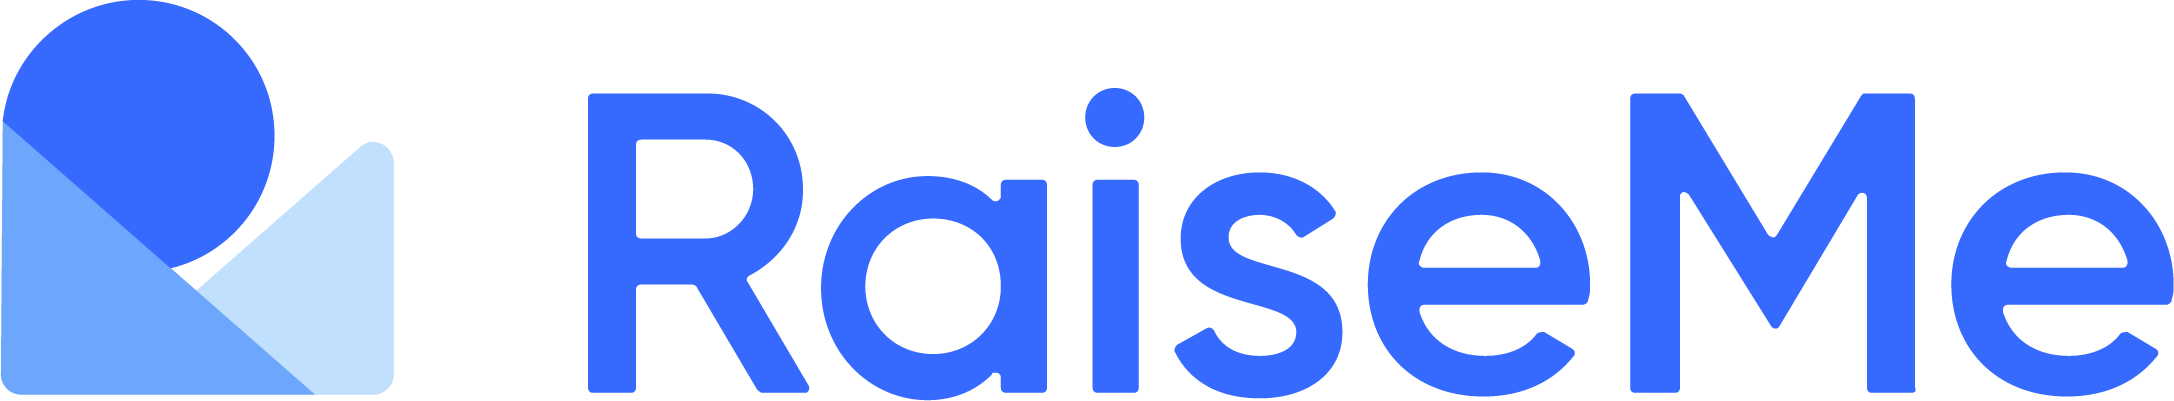 blue-raiseme-logo